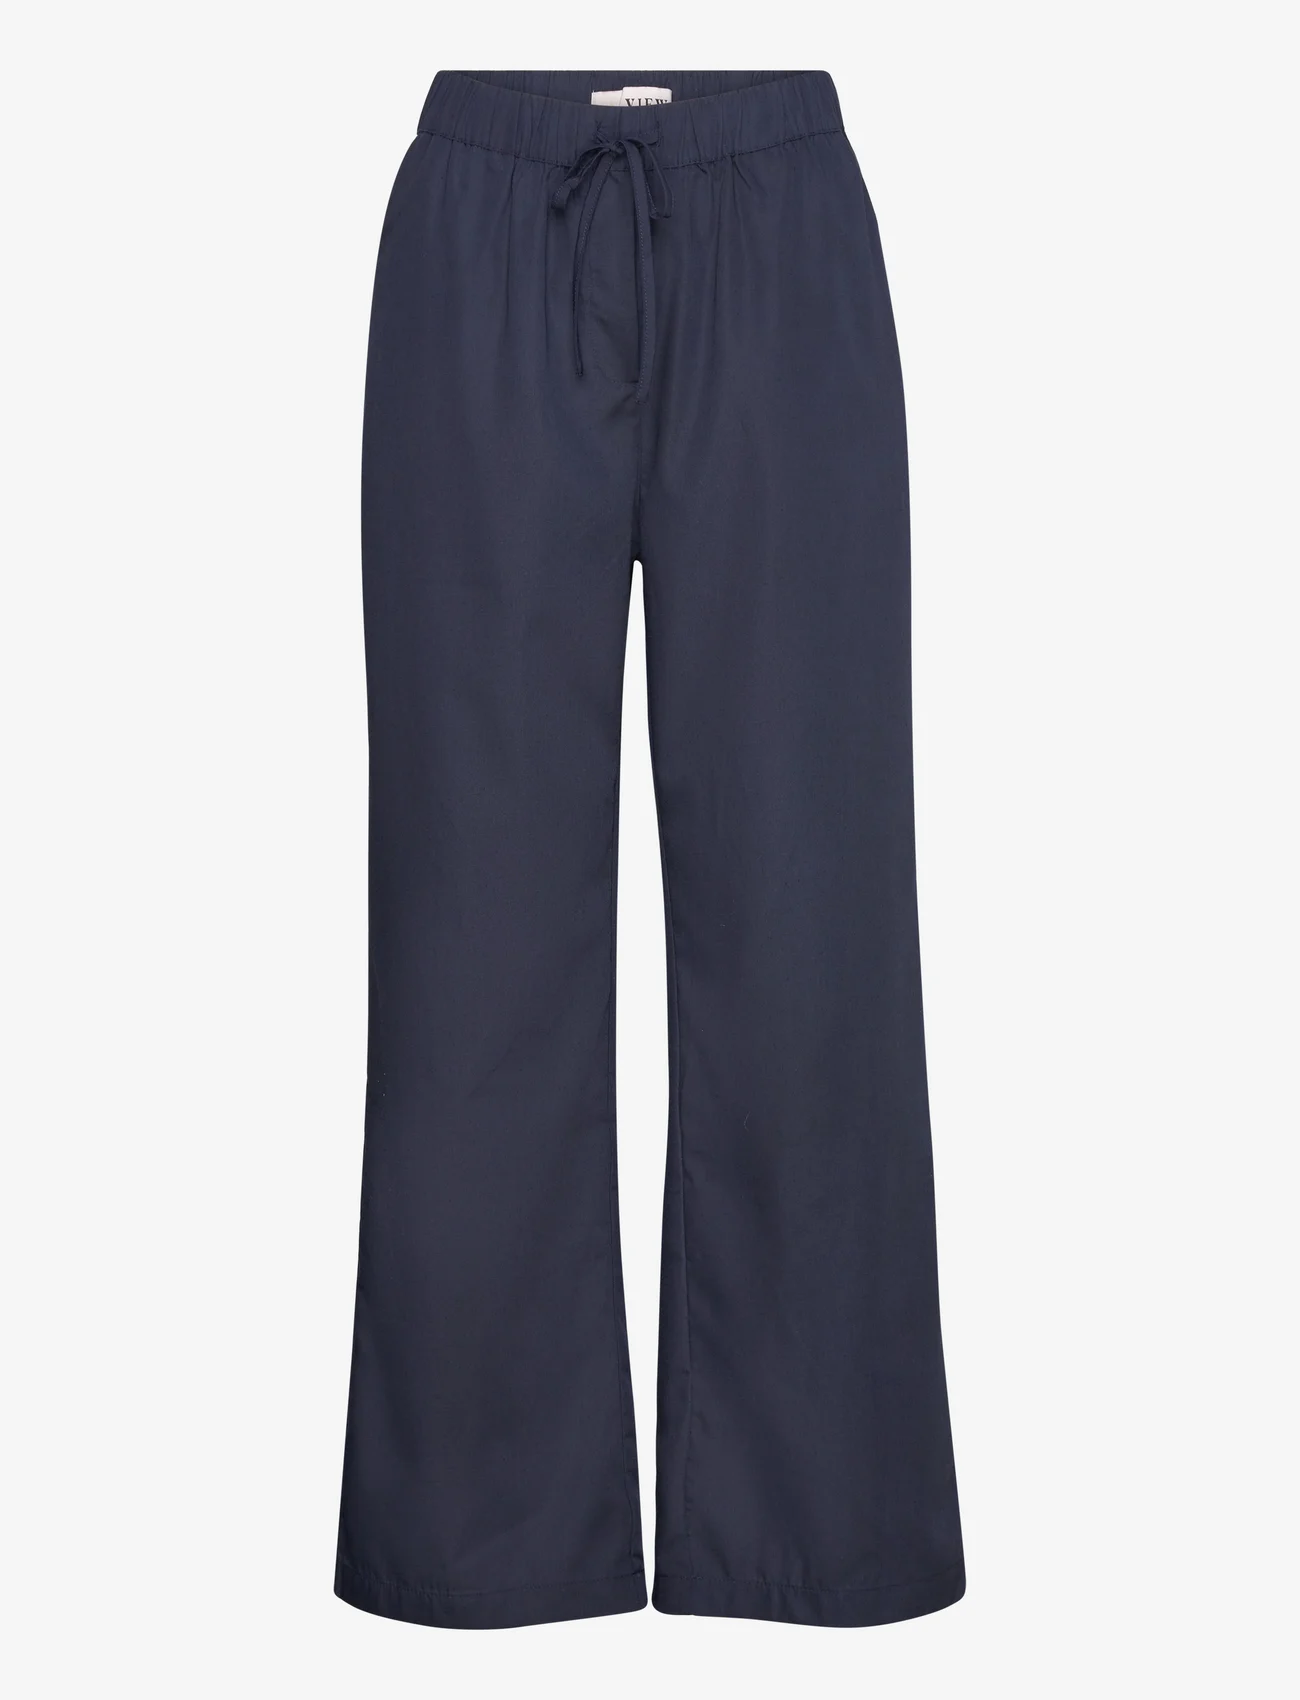 A-View - Brenda solid pants - leveälahkeiset housut - navy - 0